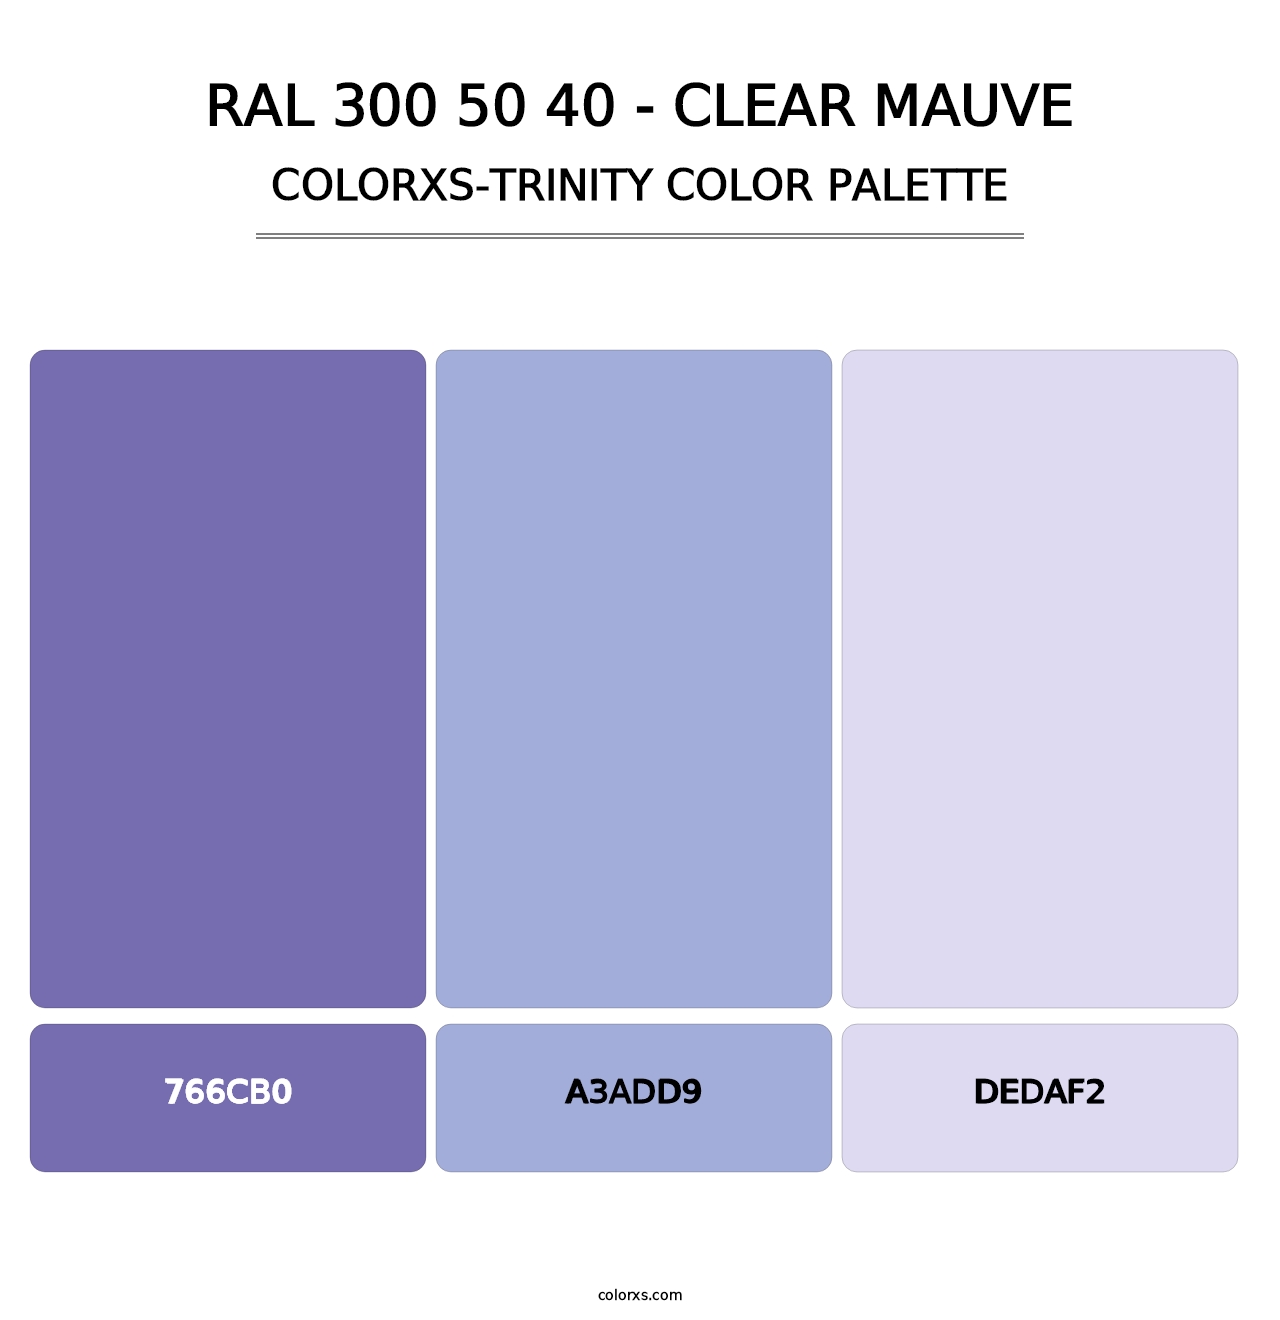 RAL 300 50 40 - Clear Mauve - Colorxs Trinity Palette